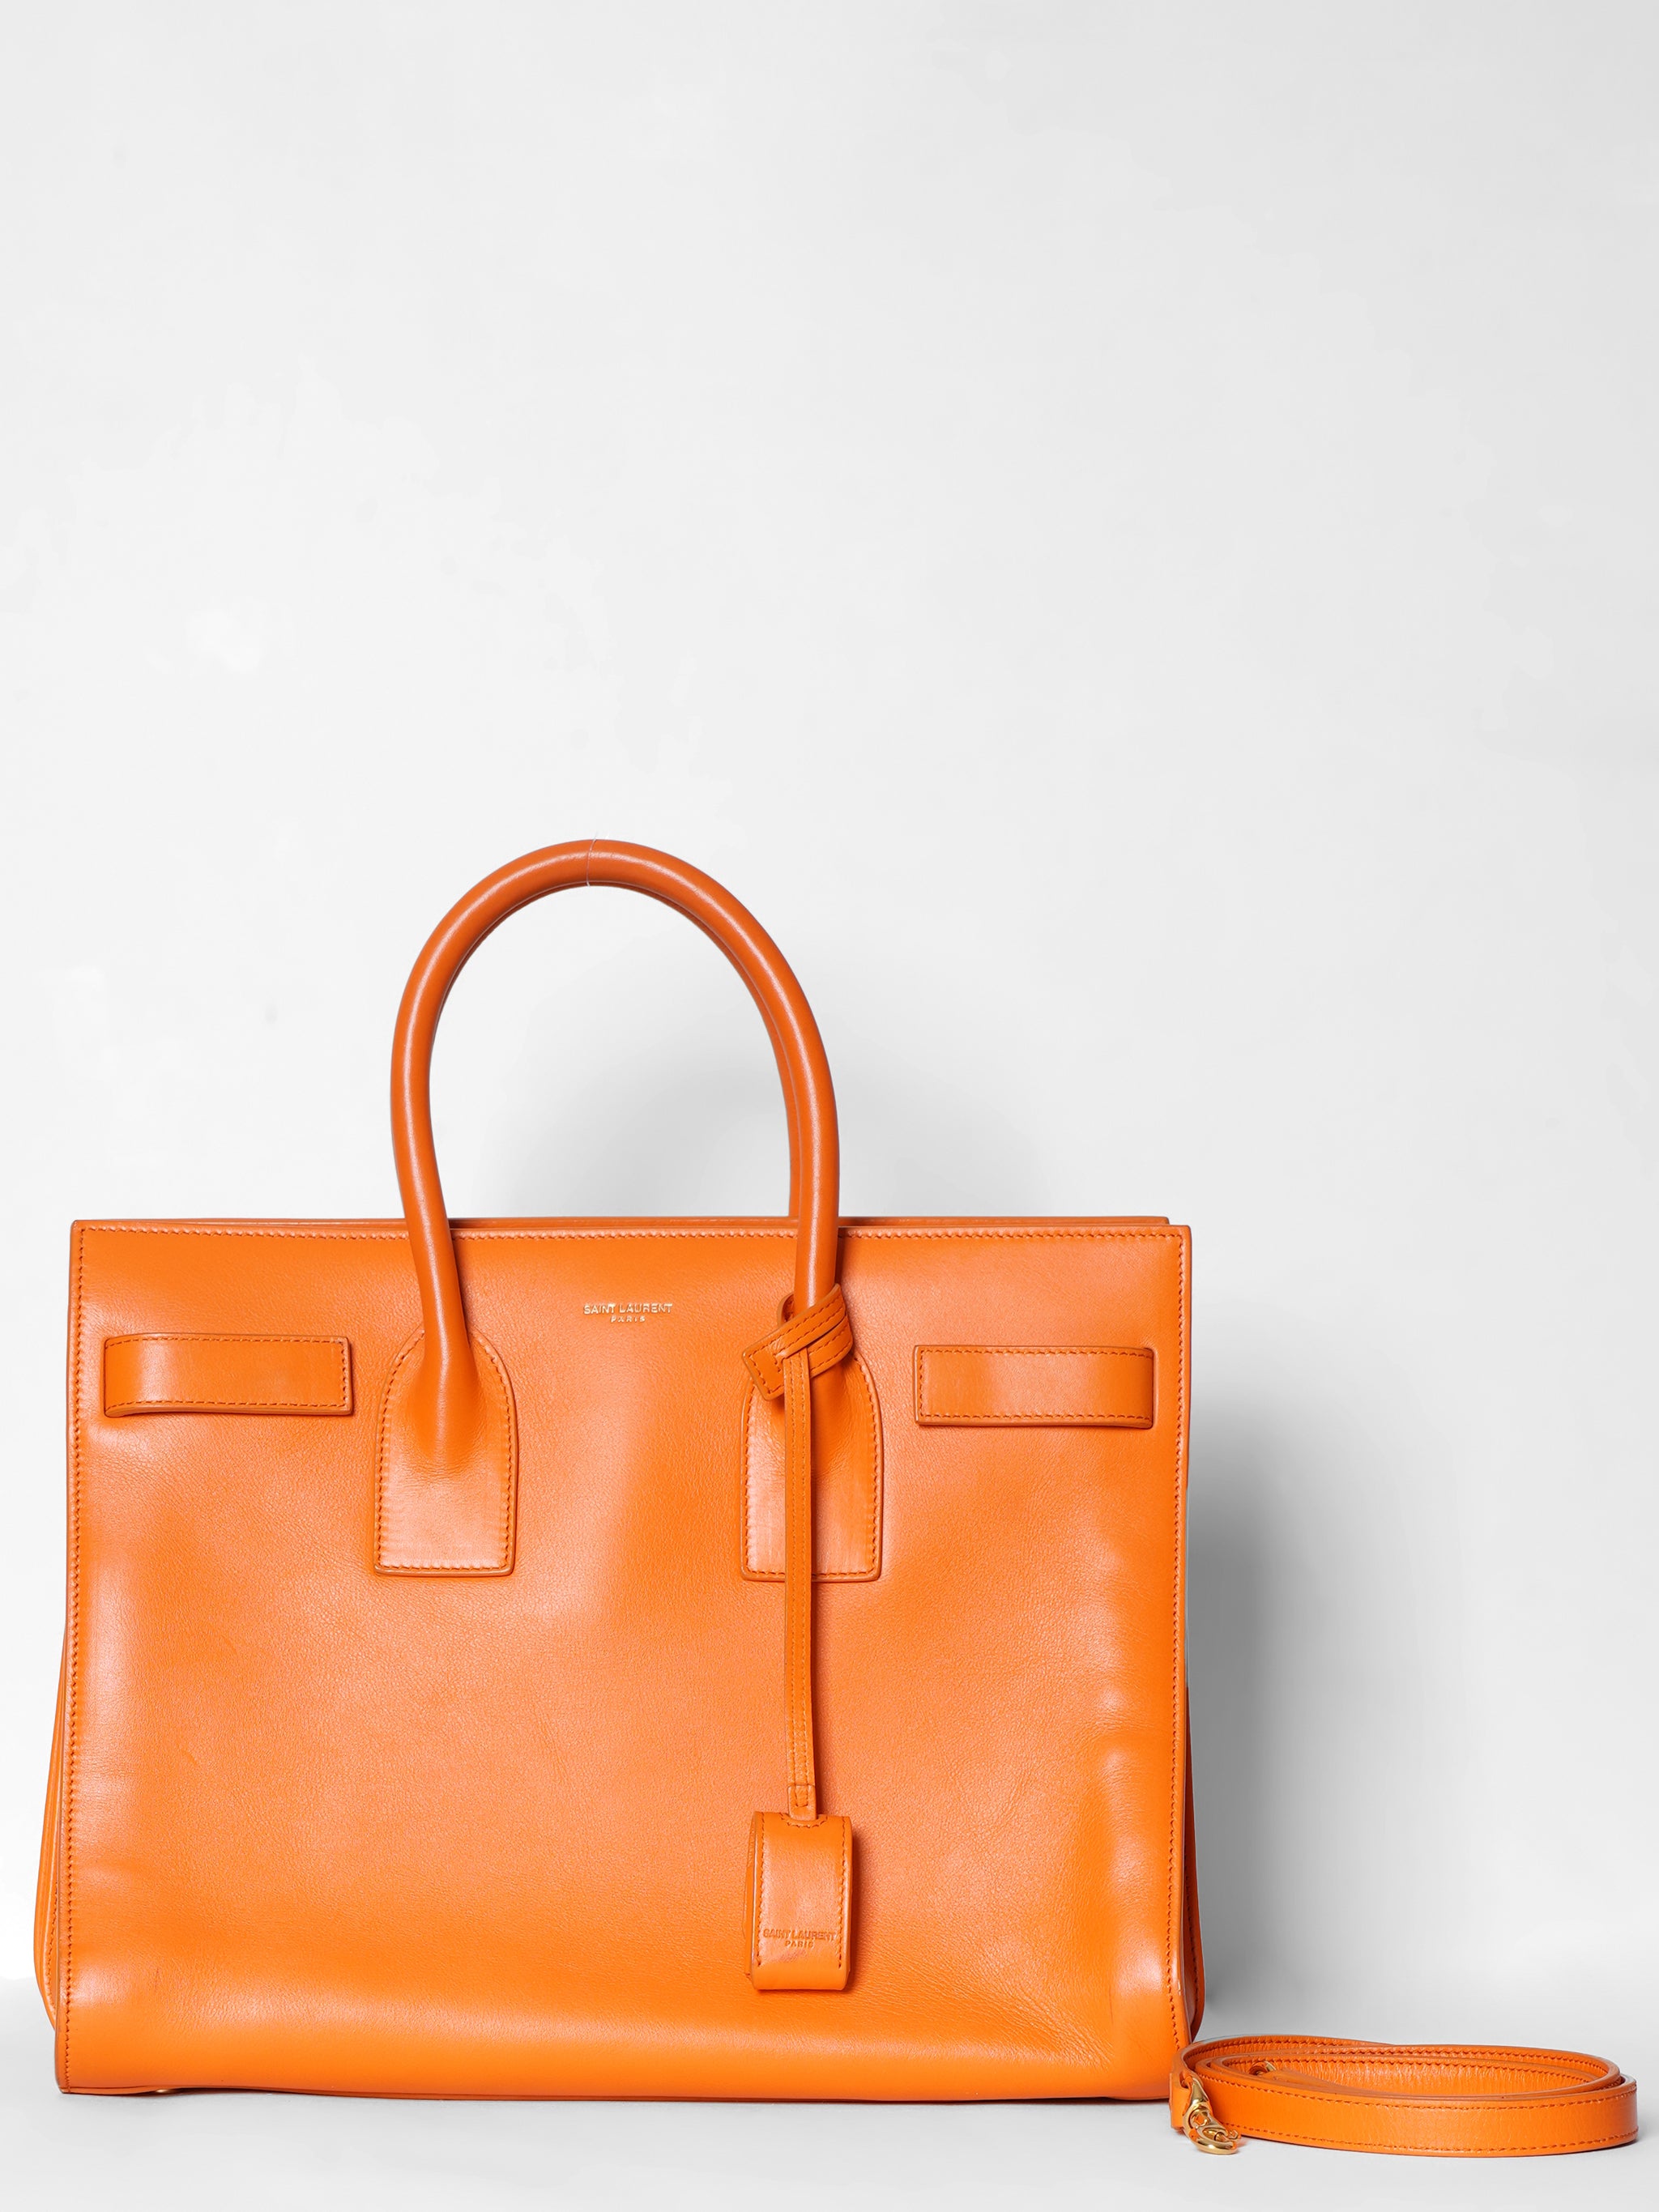 Saint Laurent Orange Handbag